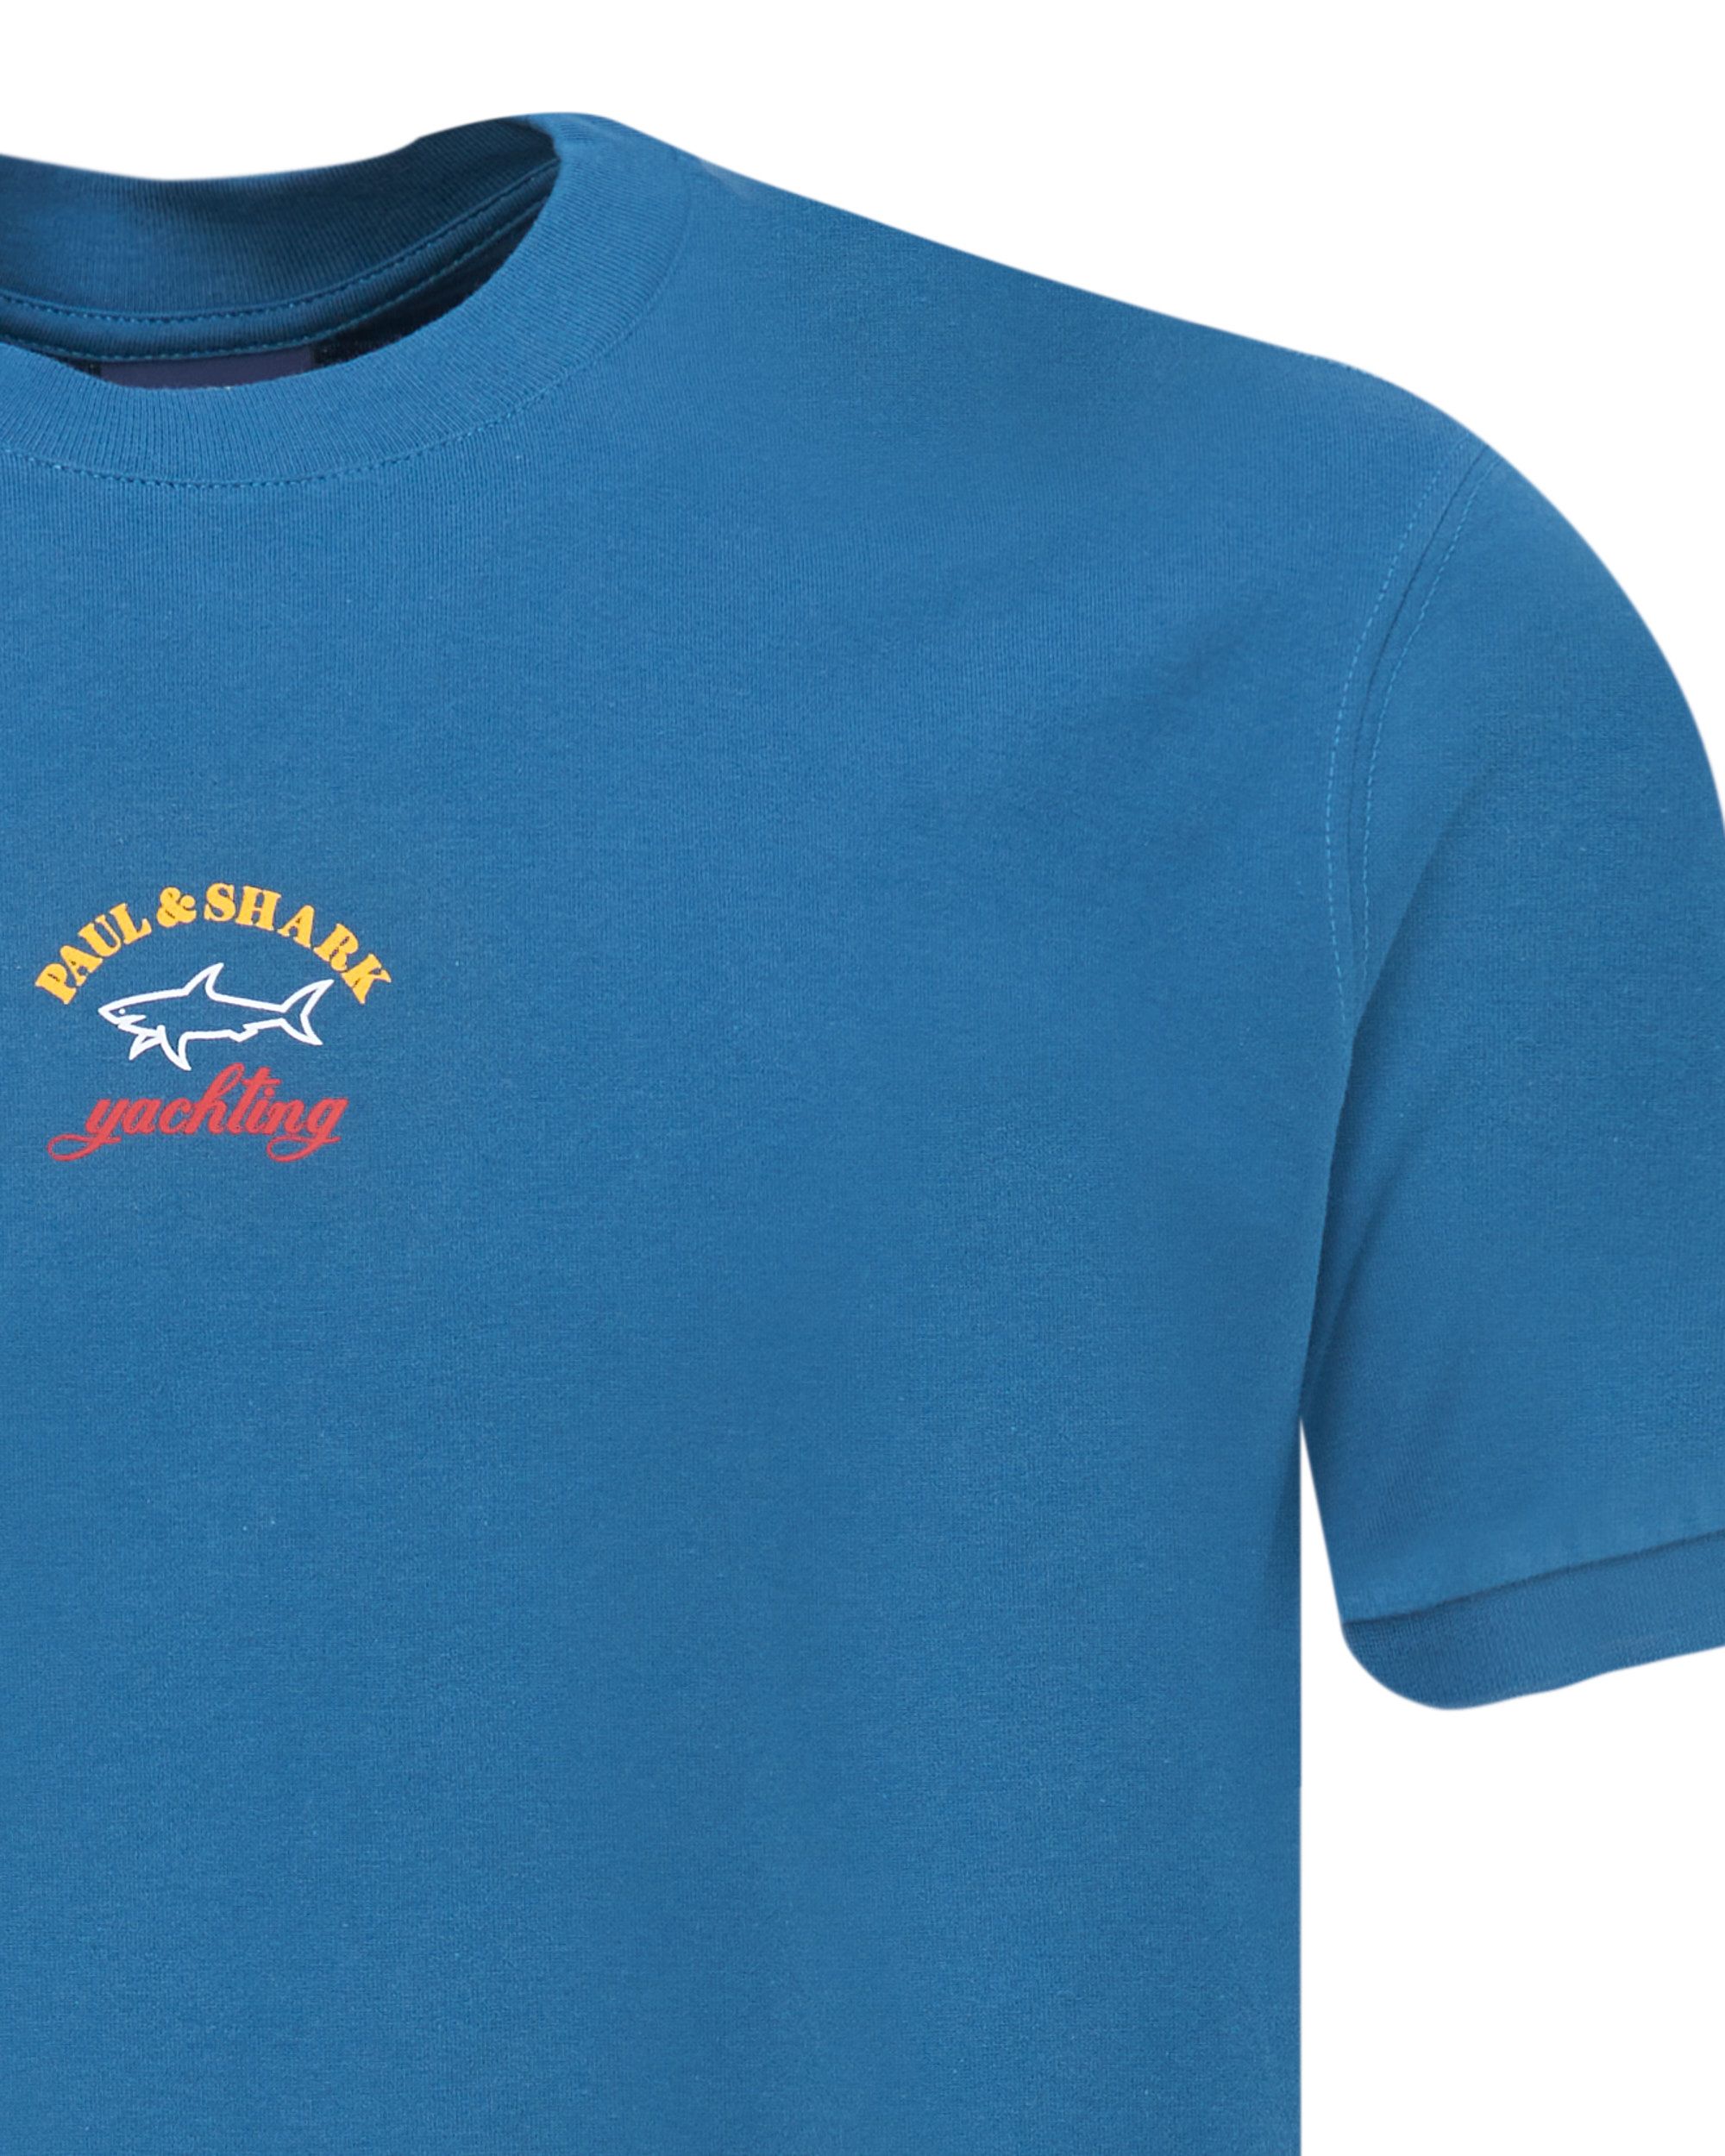 Paul & Shark - T-shirt KM Blauw 080398-001-L